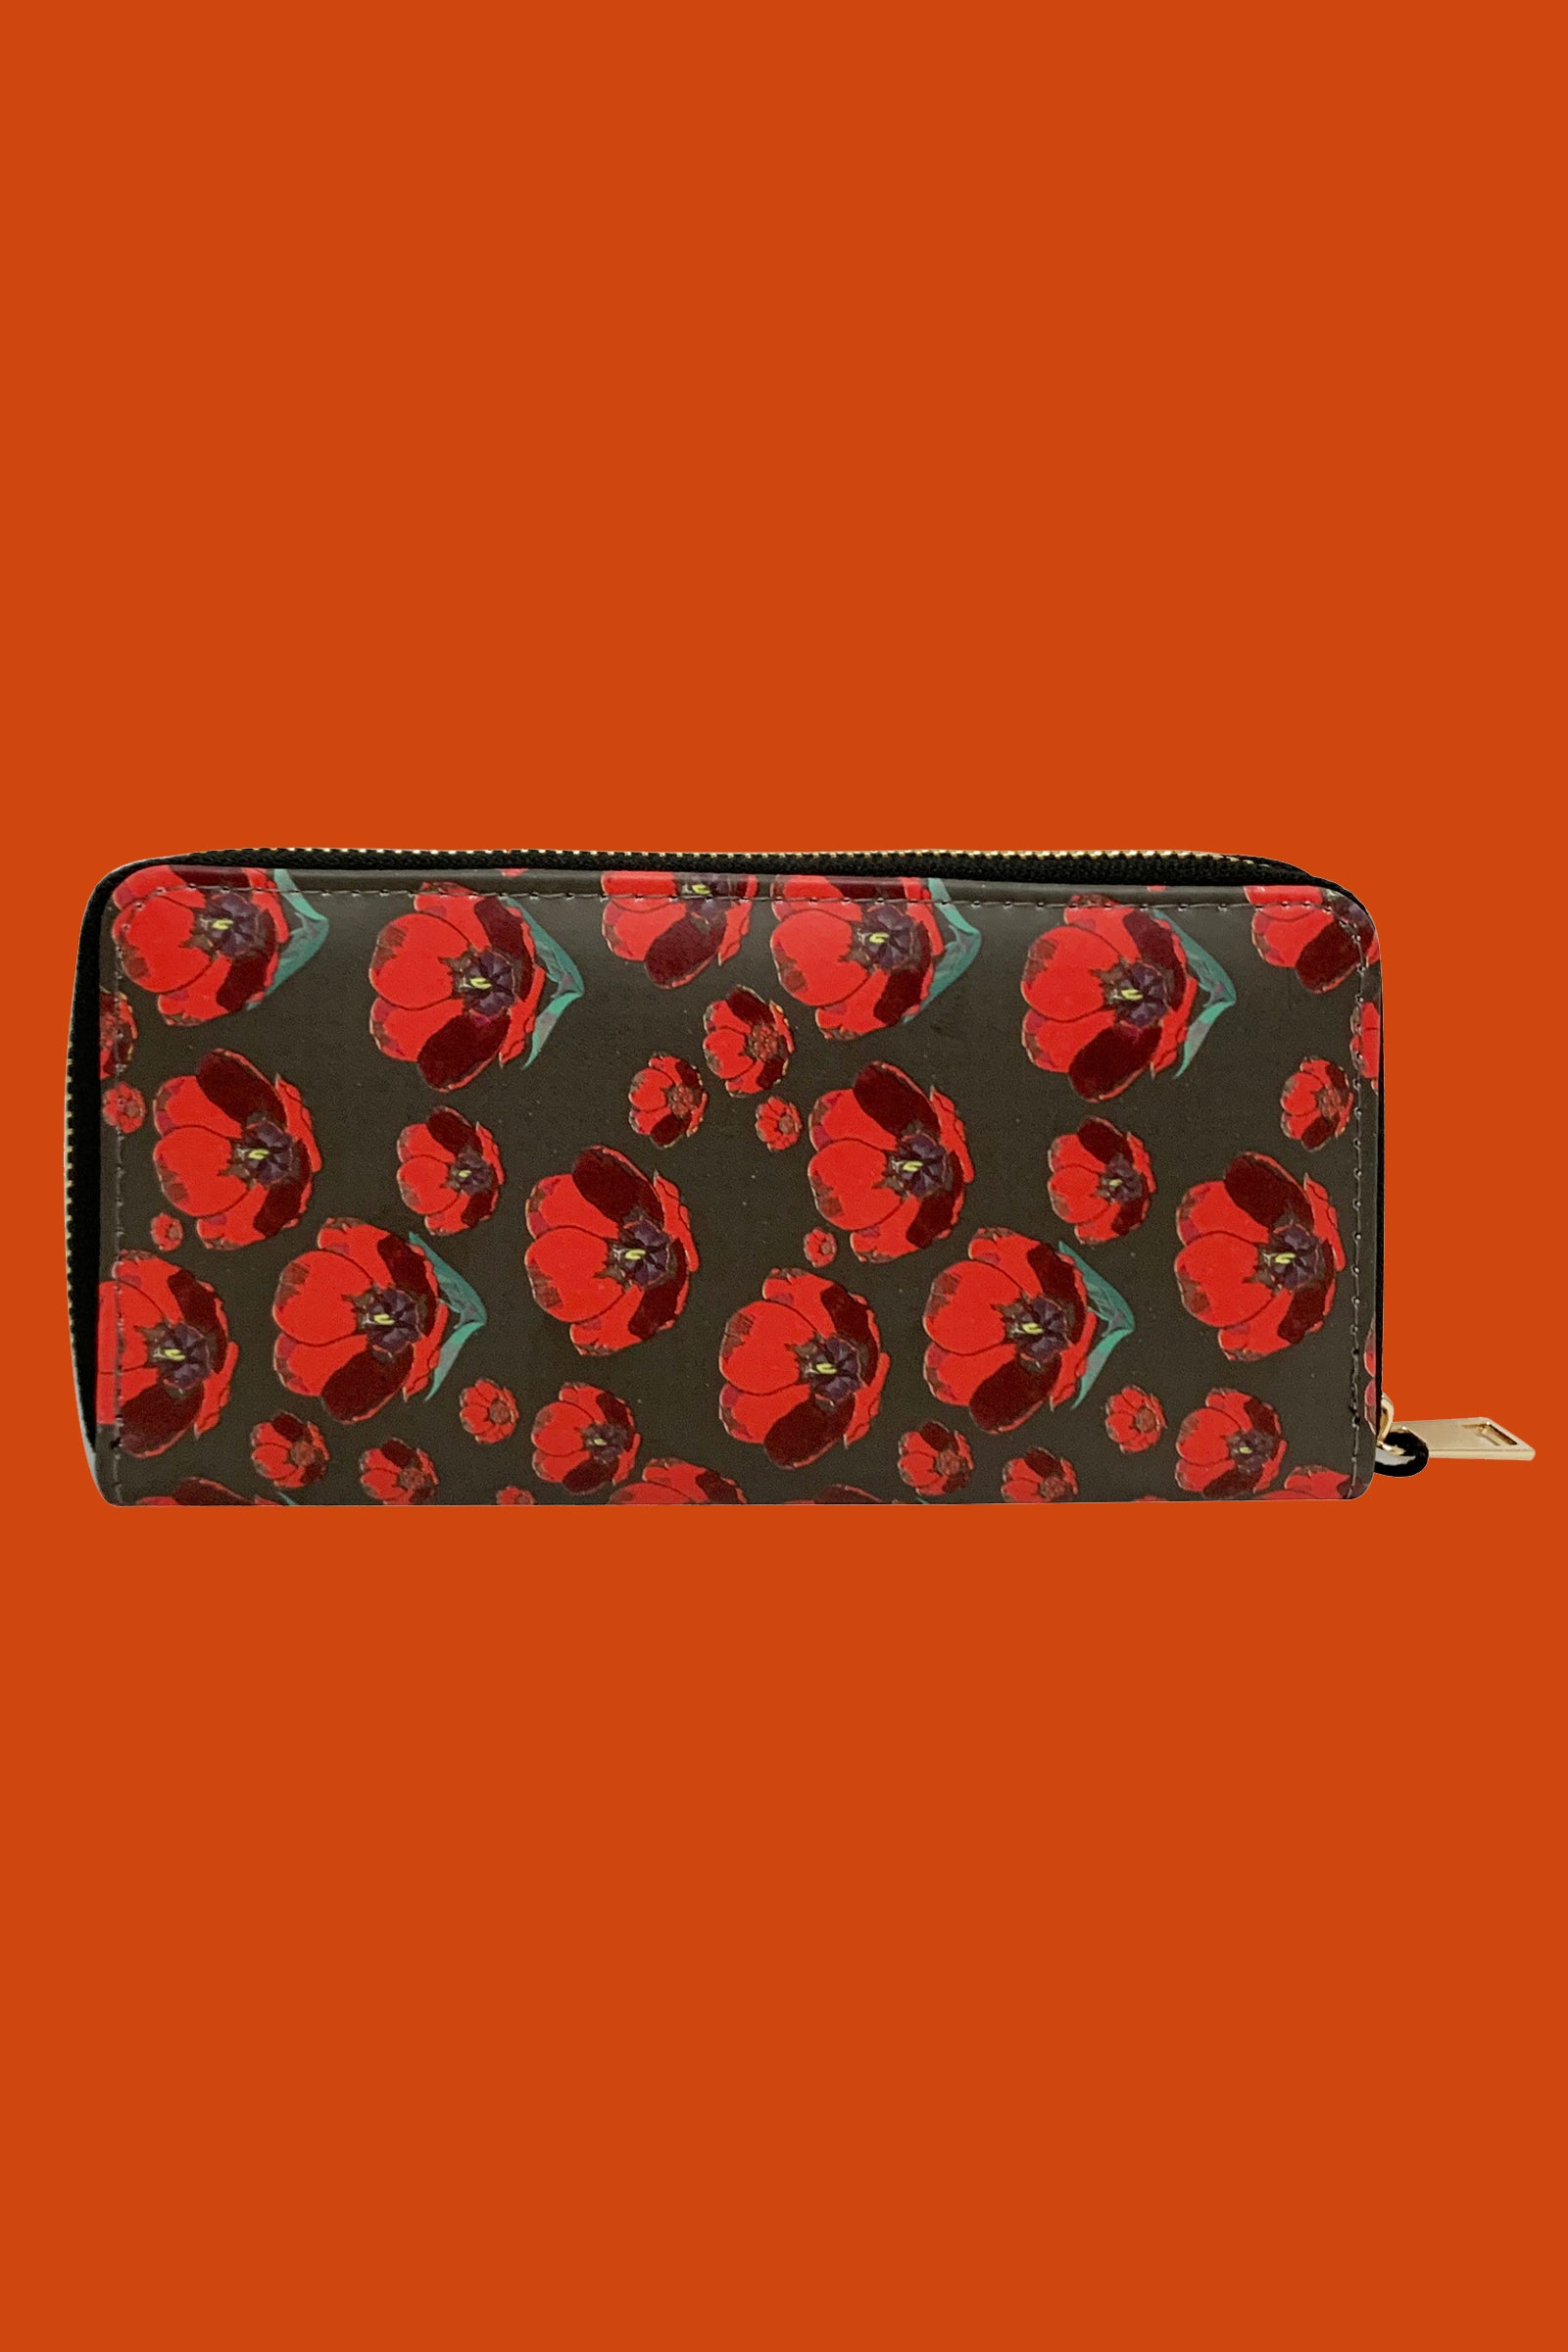 Stylish NWT Coach Bag with Pop Floral Design